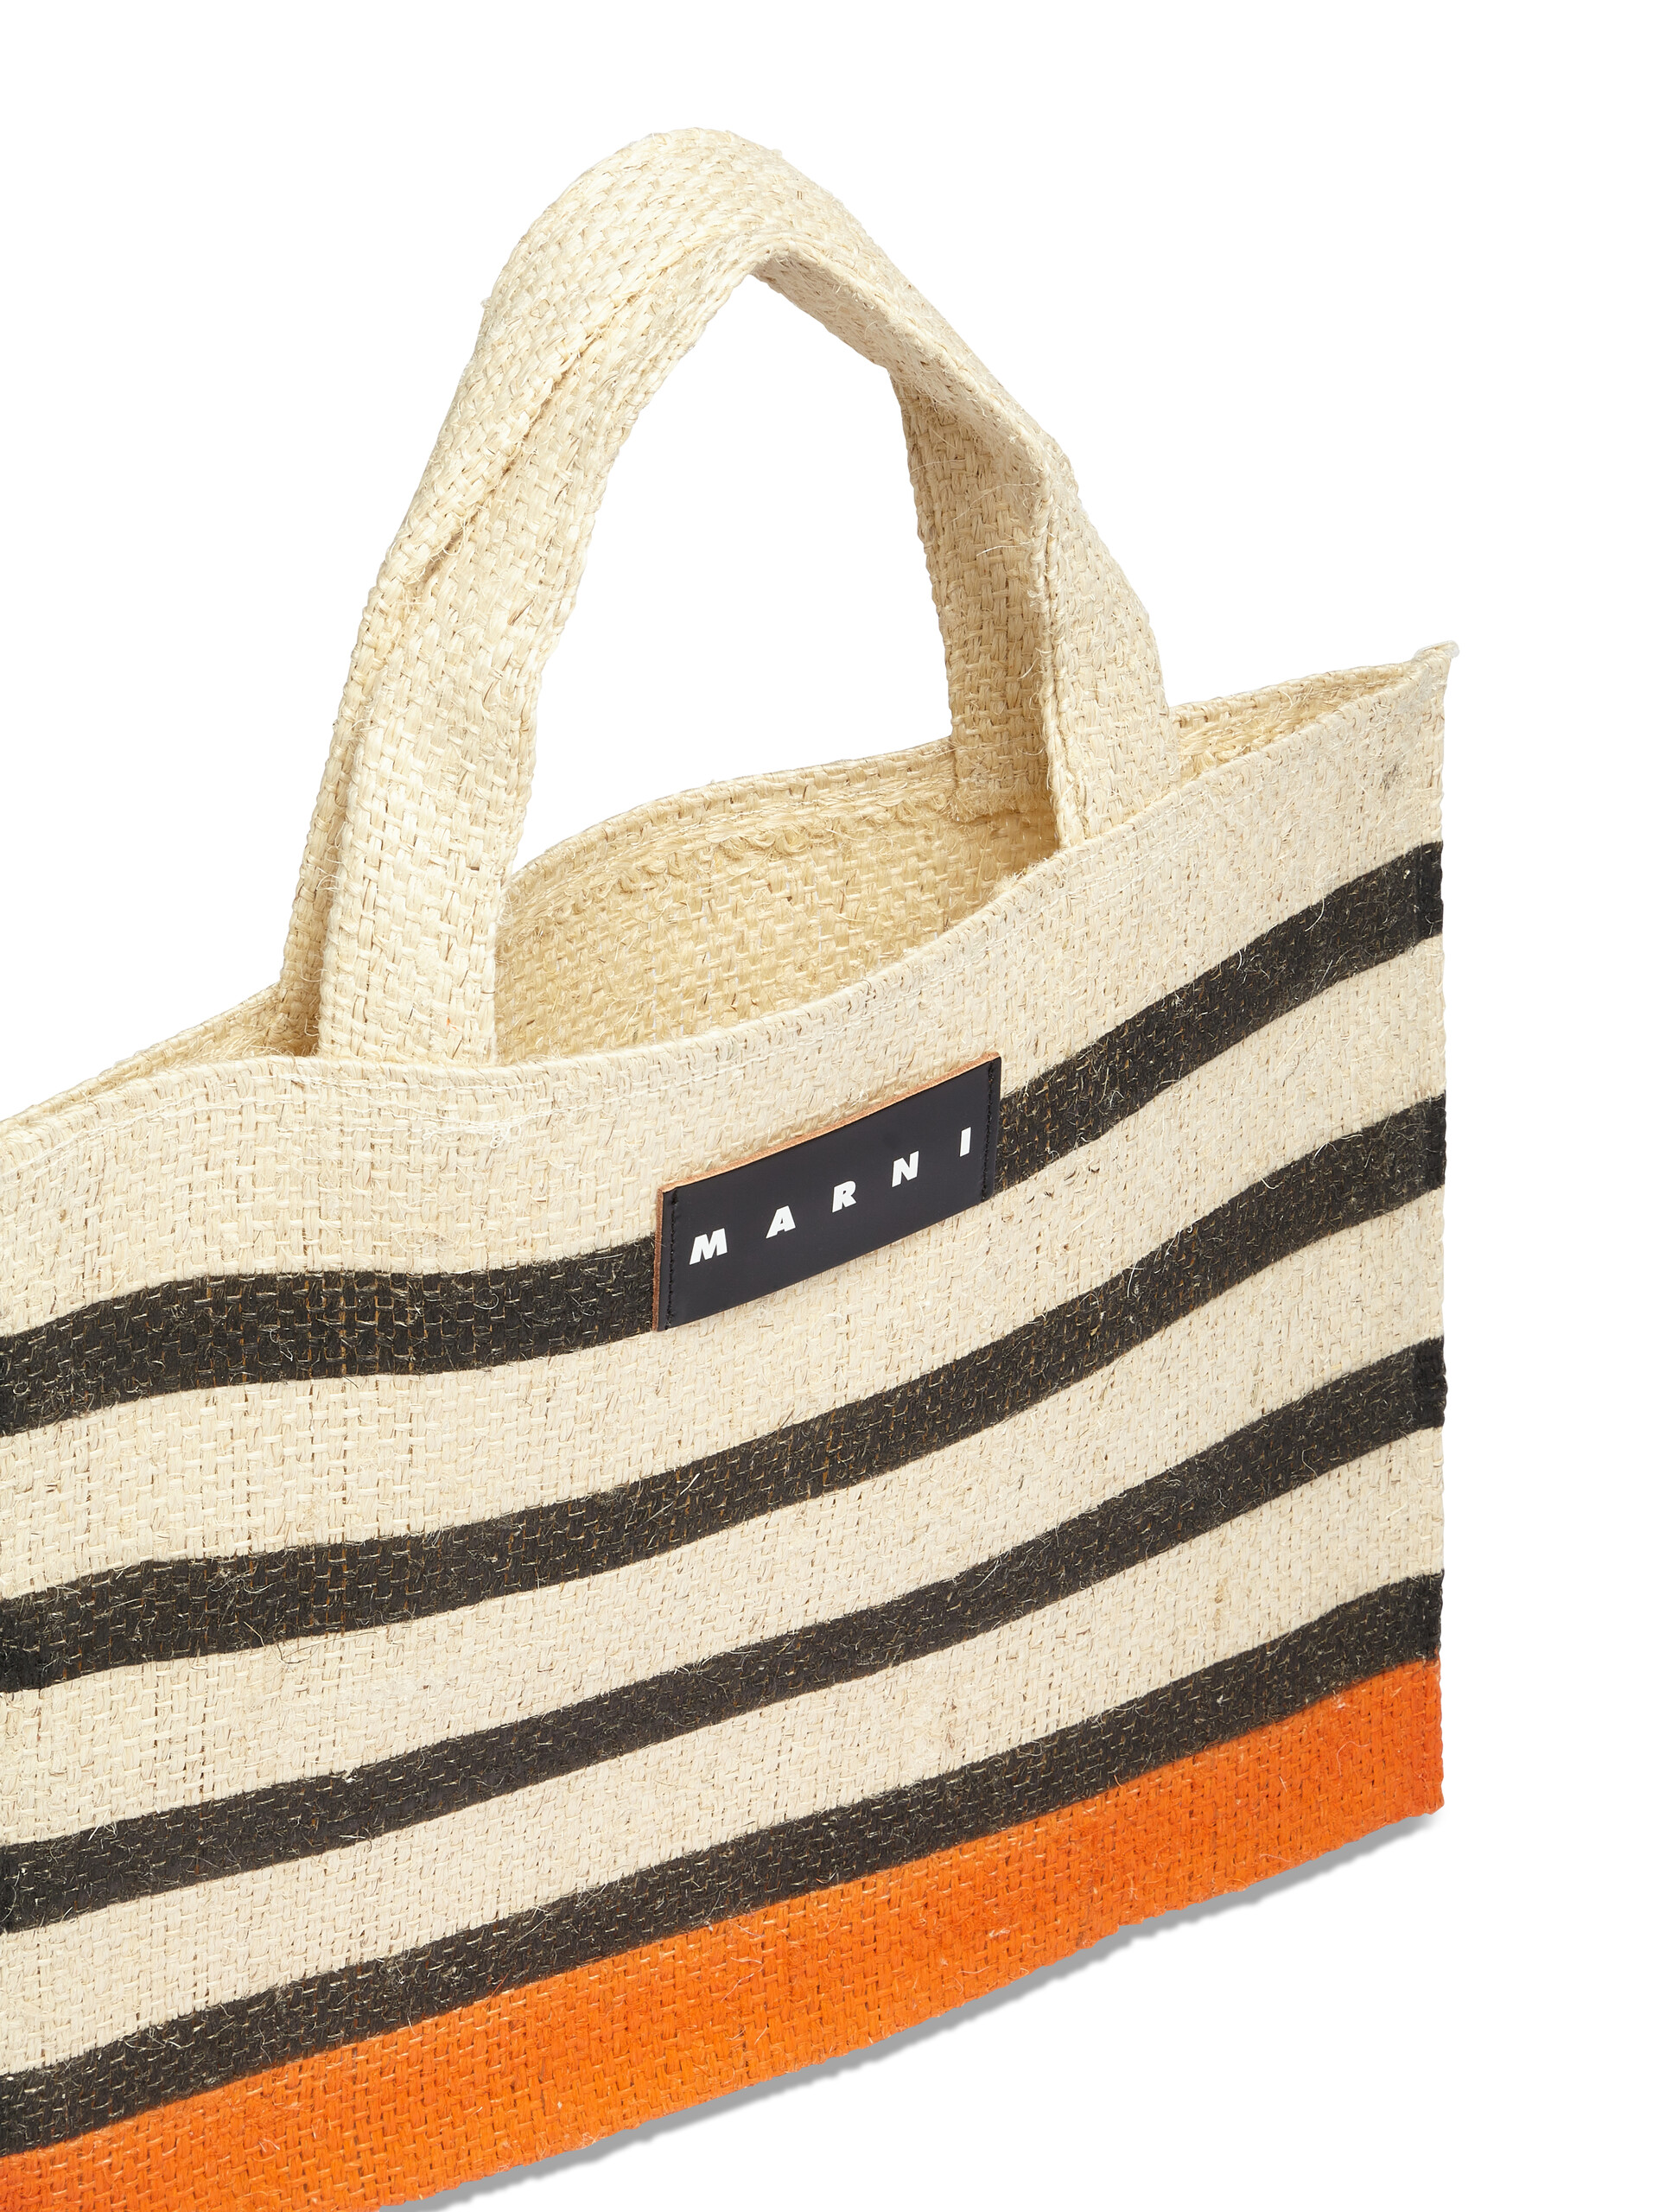 MARNI MARKET small bag in black and orange natural fiber - Bags - Image 4